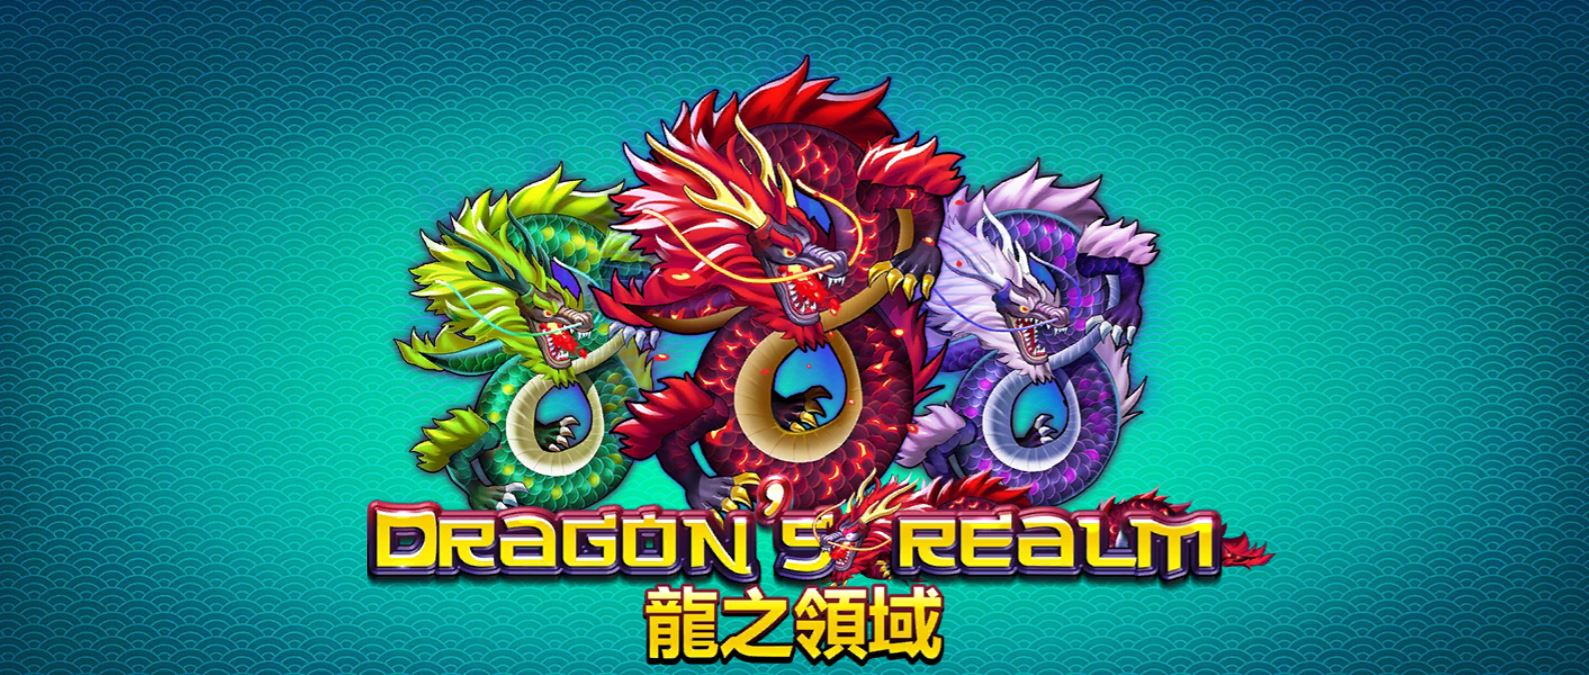 Slotxo-Dragons realm-สมัครสล็อตxo